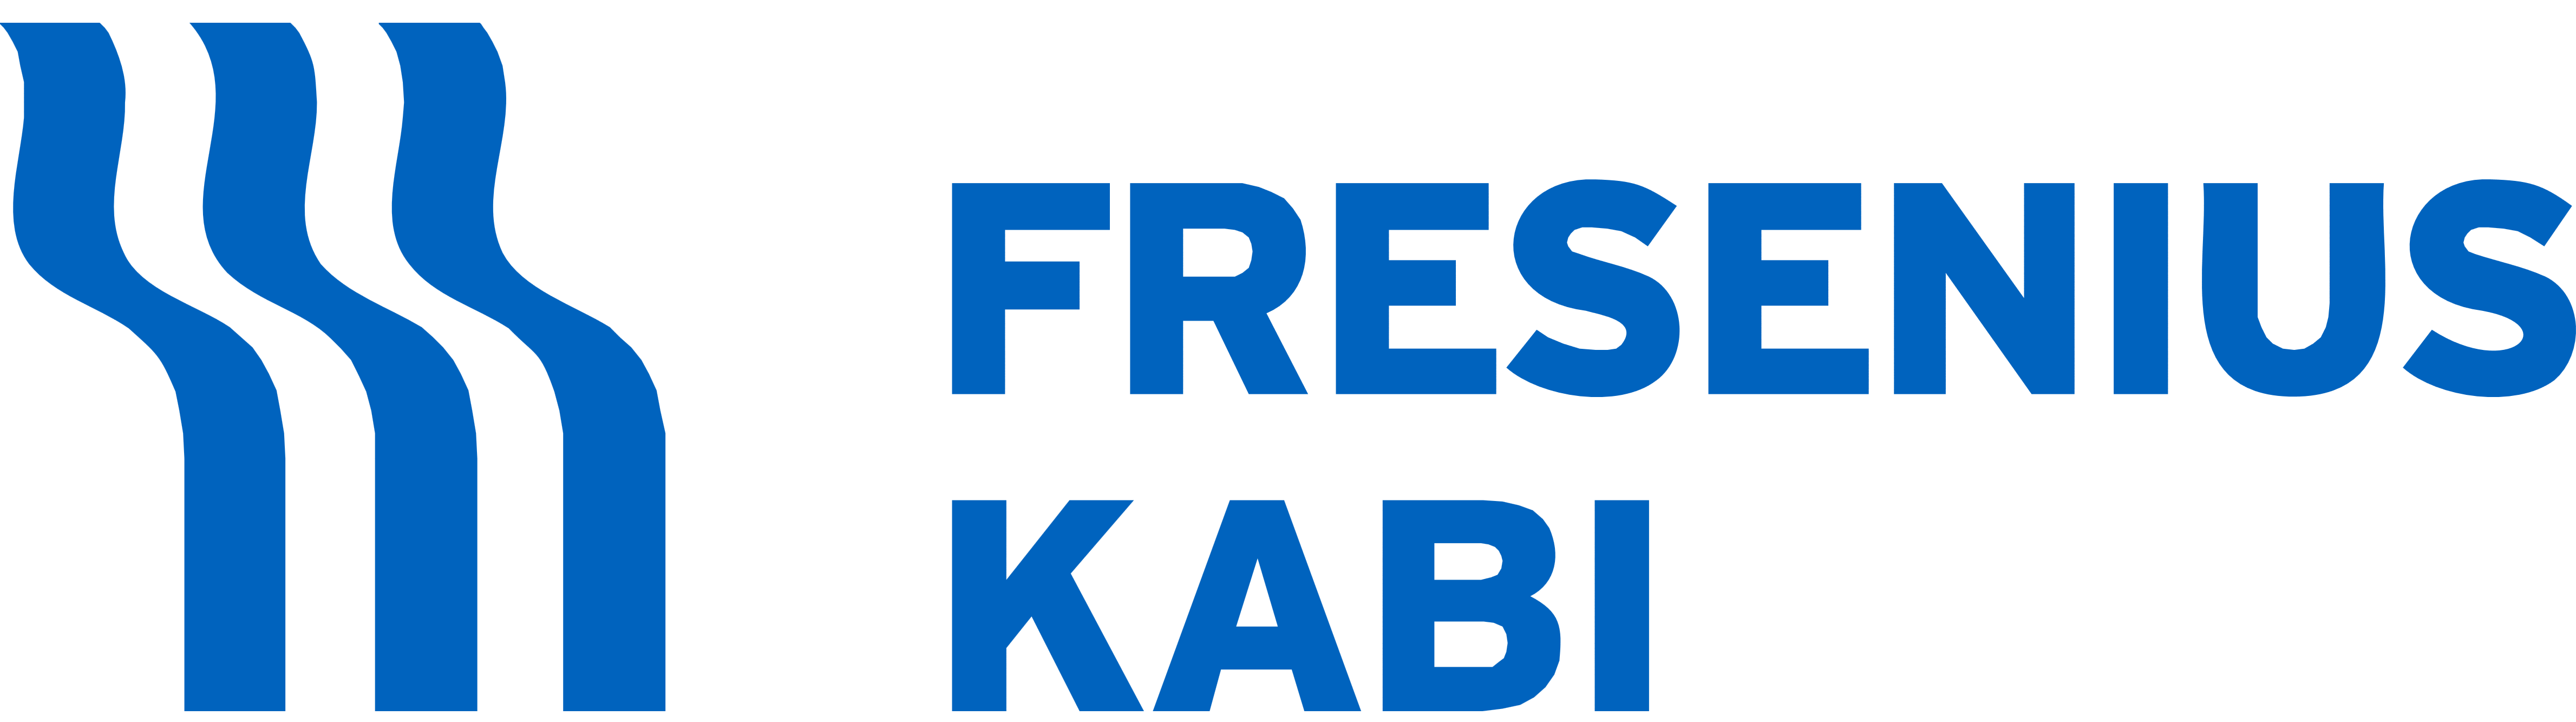 Fresenius Medical Care; Logo 